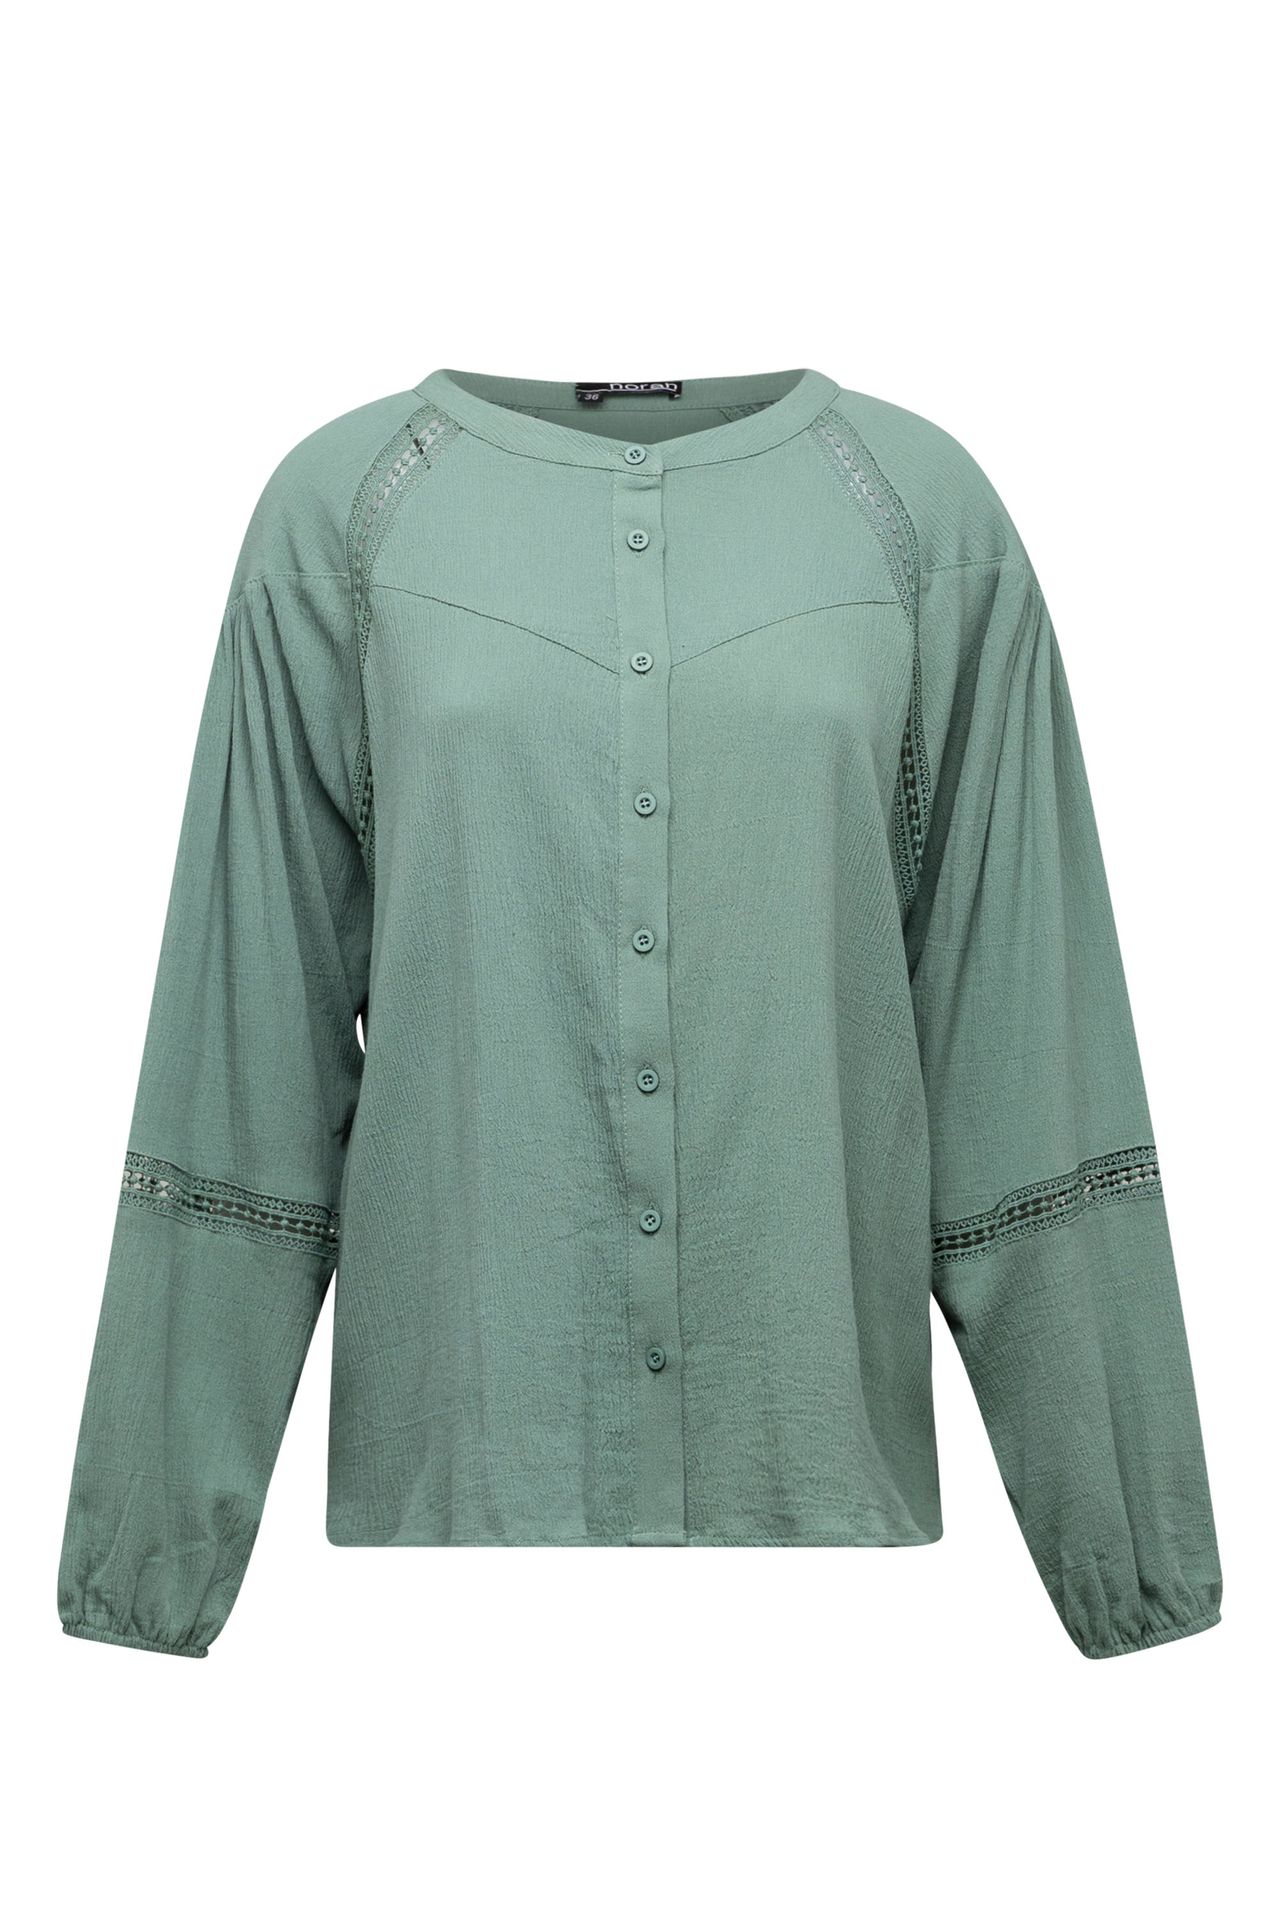 Norah Groene blouse grey green 213411-053